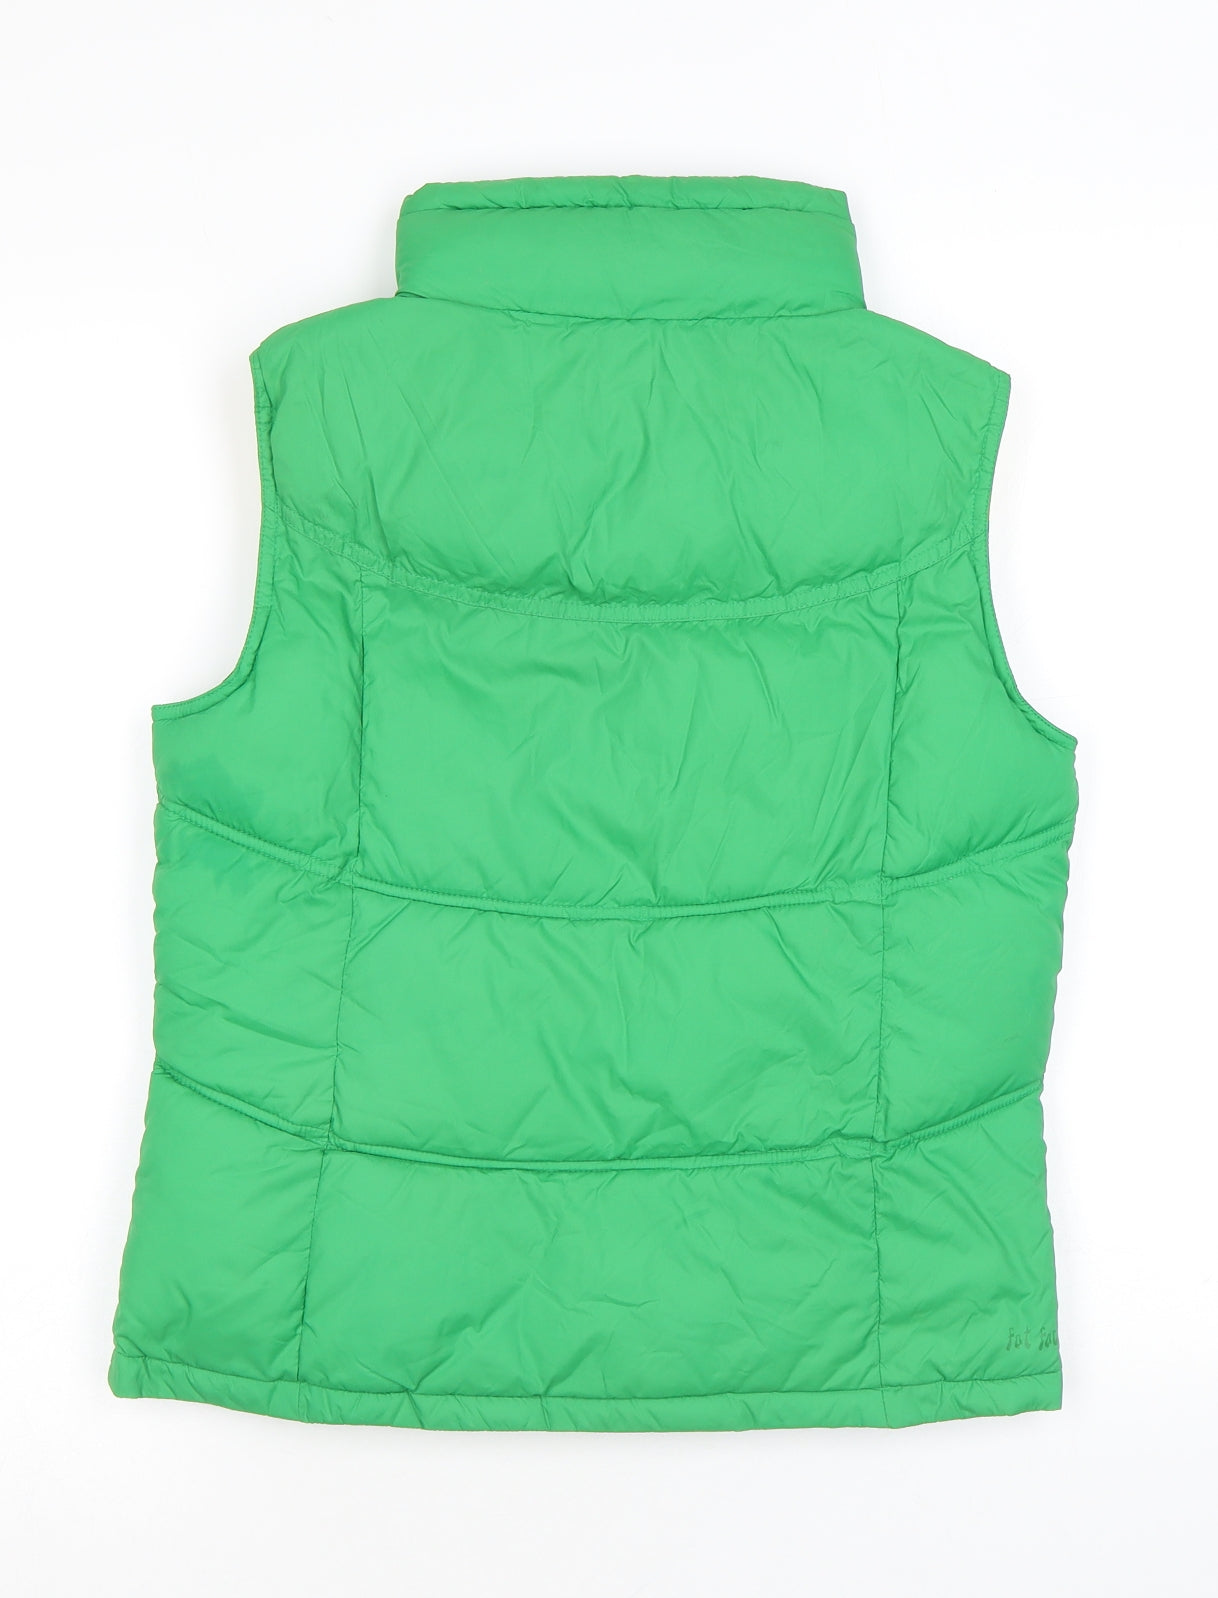 Fat Face Womens Green Gilet Jacket Size 10 Zip